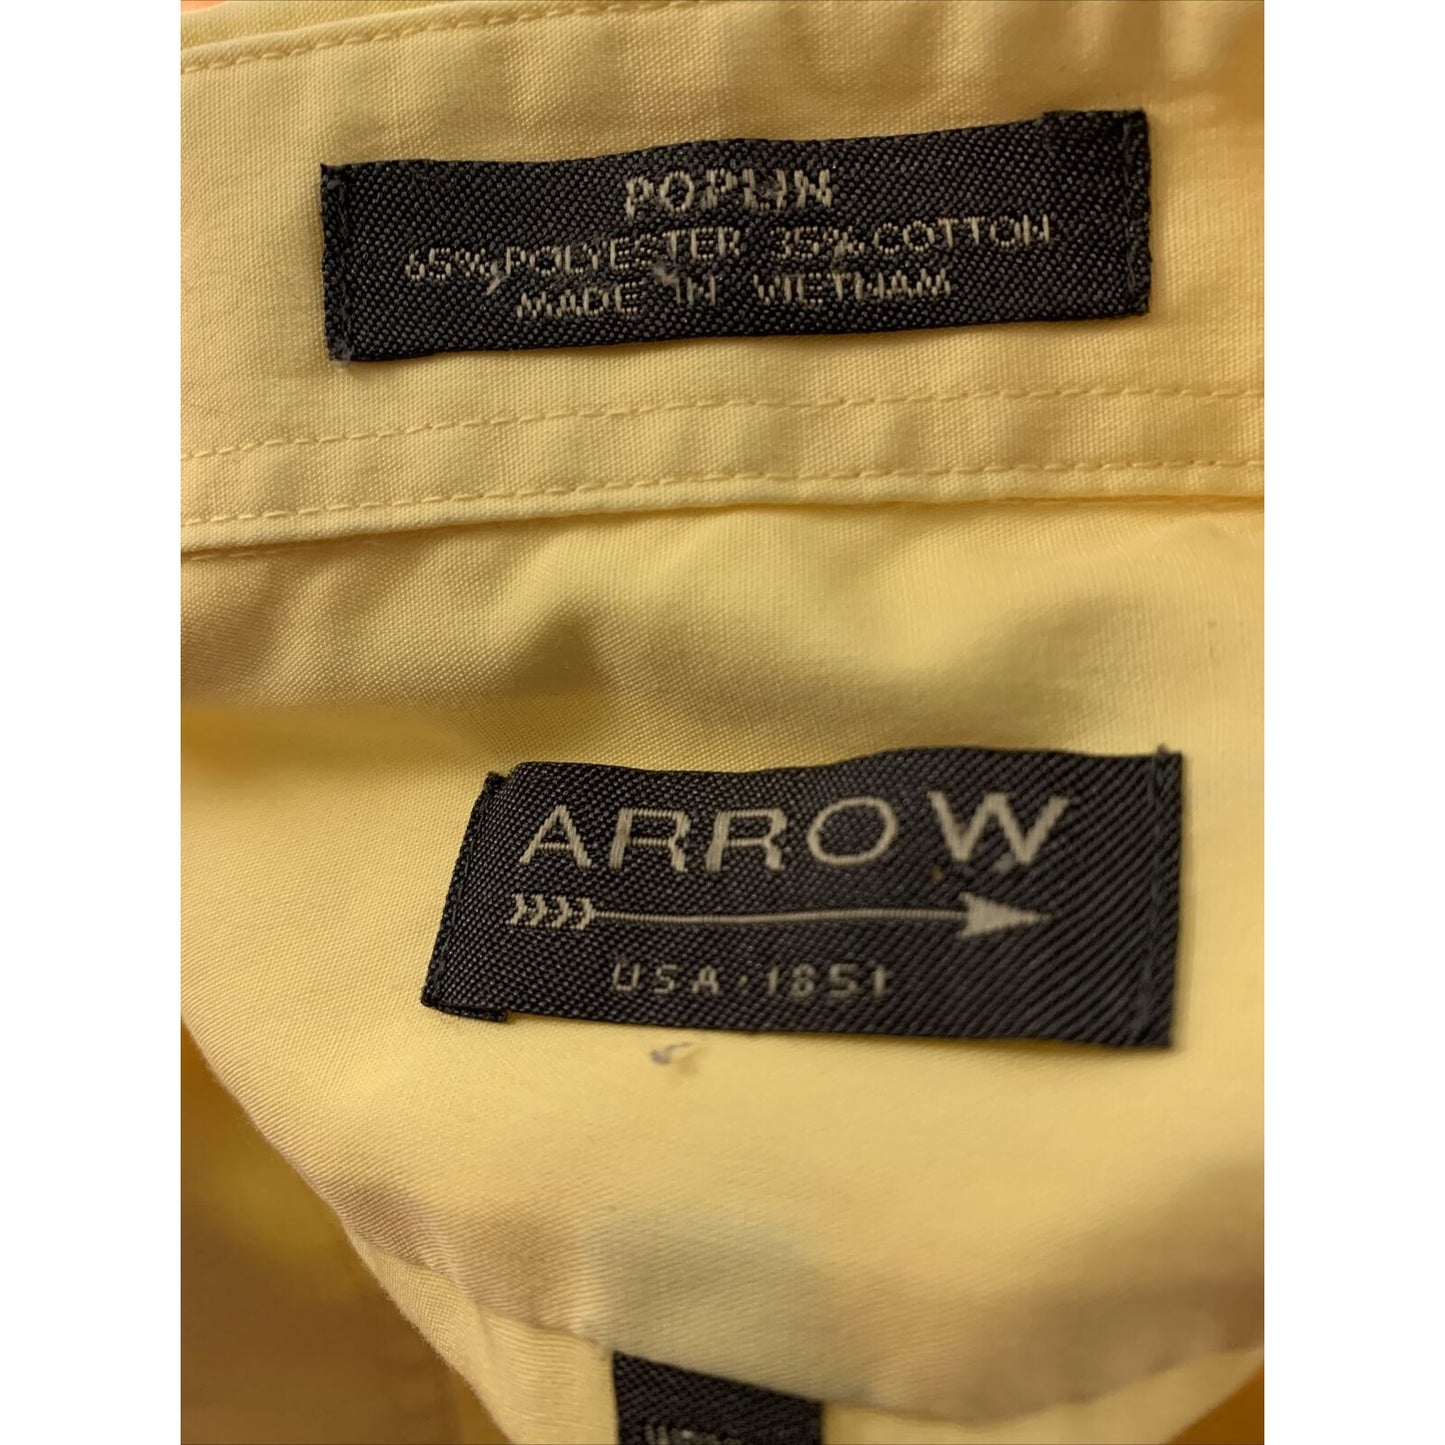 Arrow Hamilton Poplin Short Sleeve Button Down Shirt Large 16 Canary Yellow